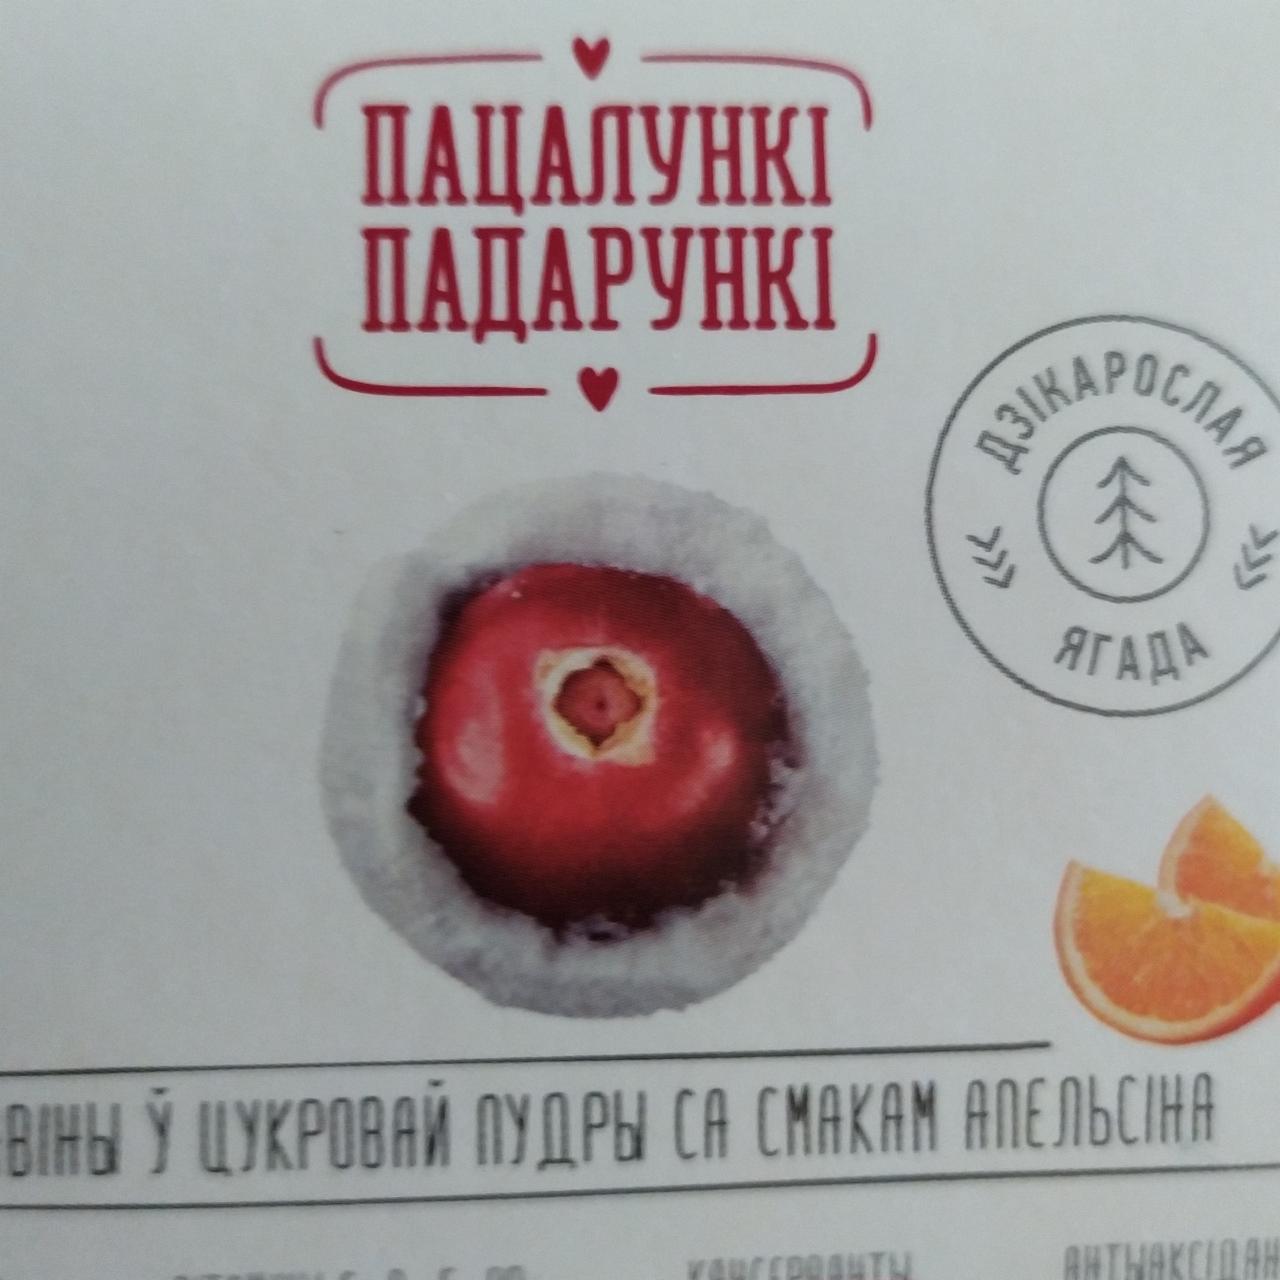 Фото - Клюква в сахарной пудре со вкусом апельсина Пацалункi падарункi Аржаница